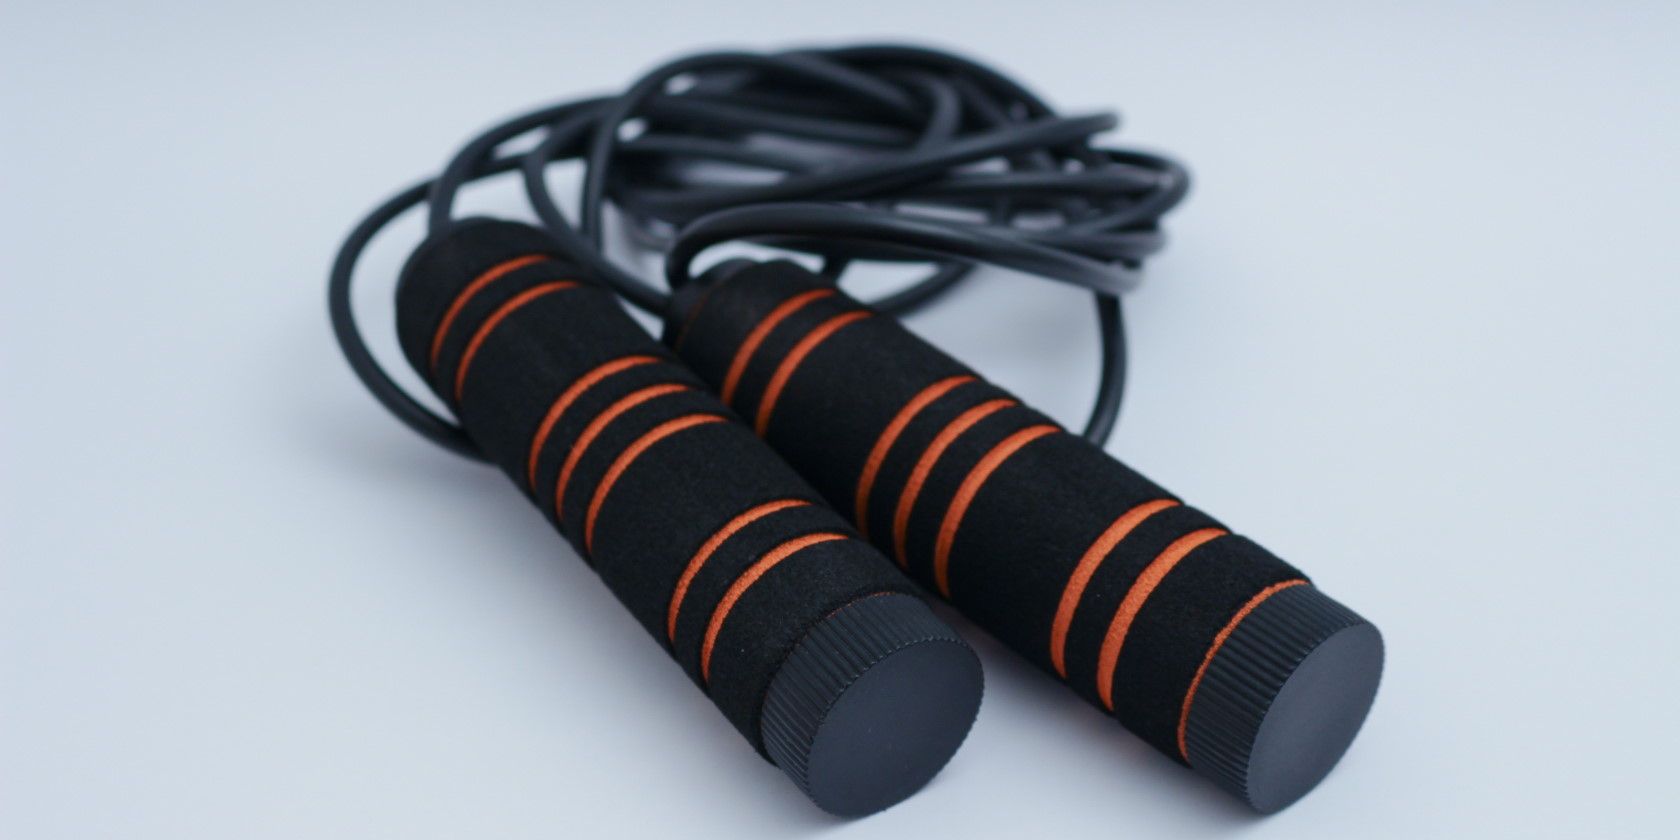 Black and orange jump rope lying on the floor